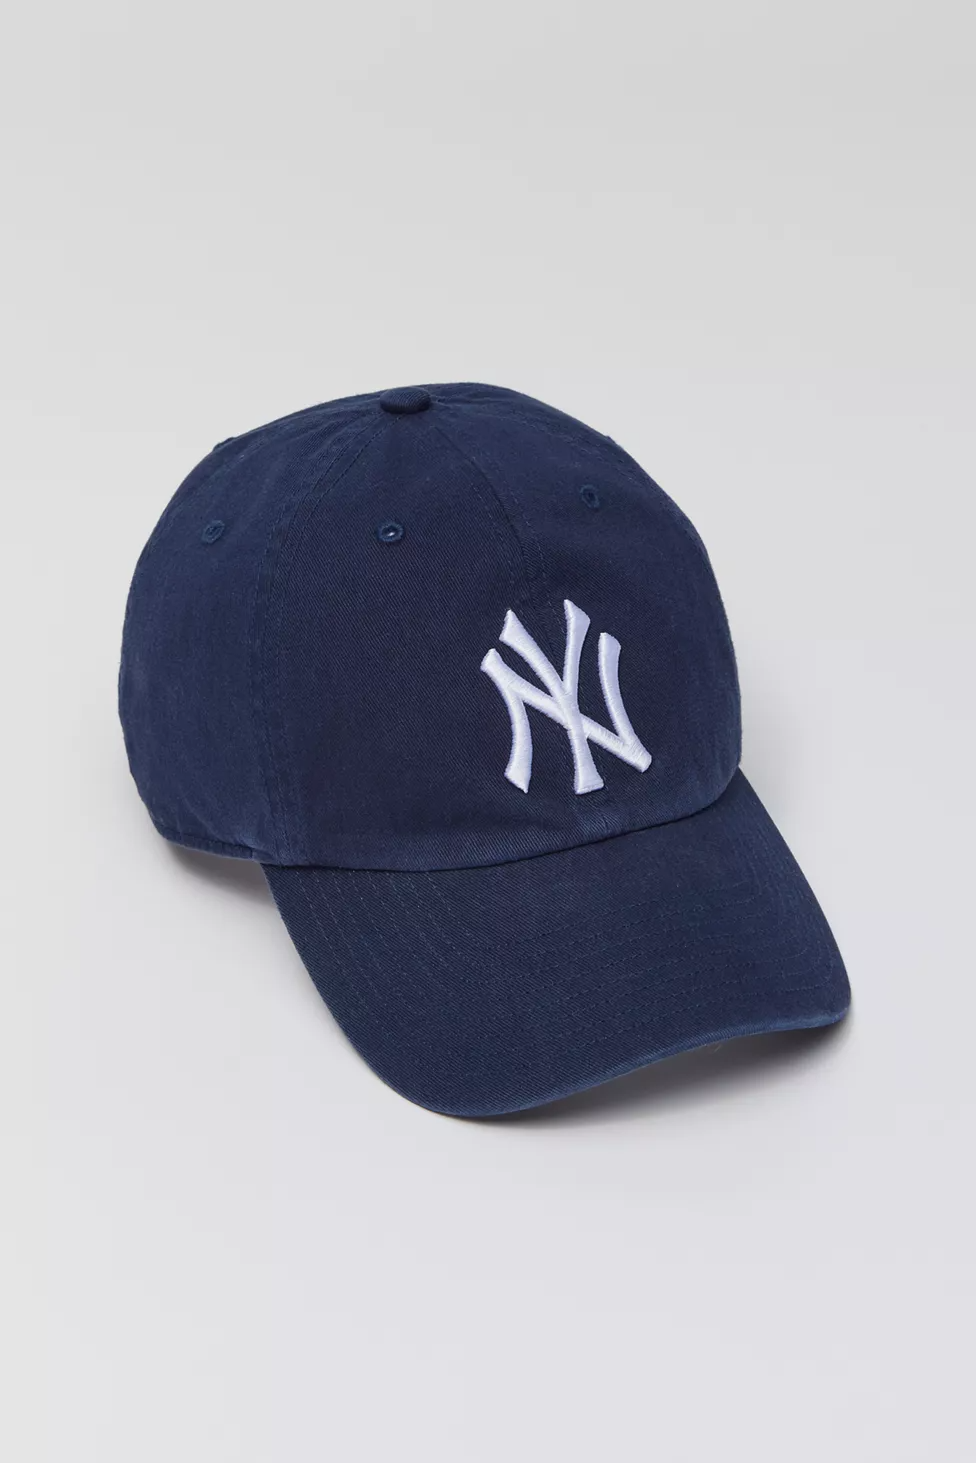 #8217;47 + New York Yankees Classic Baseball Hat